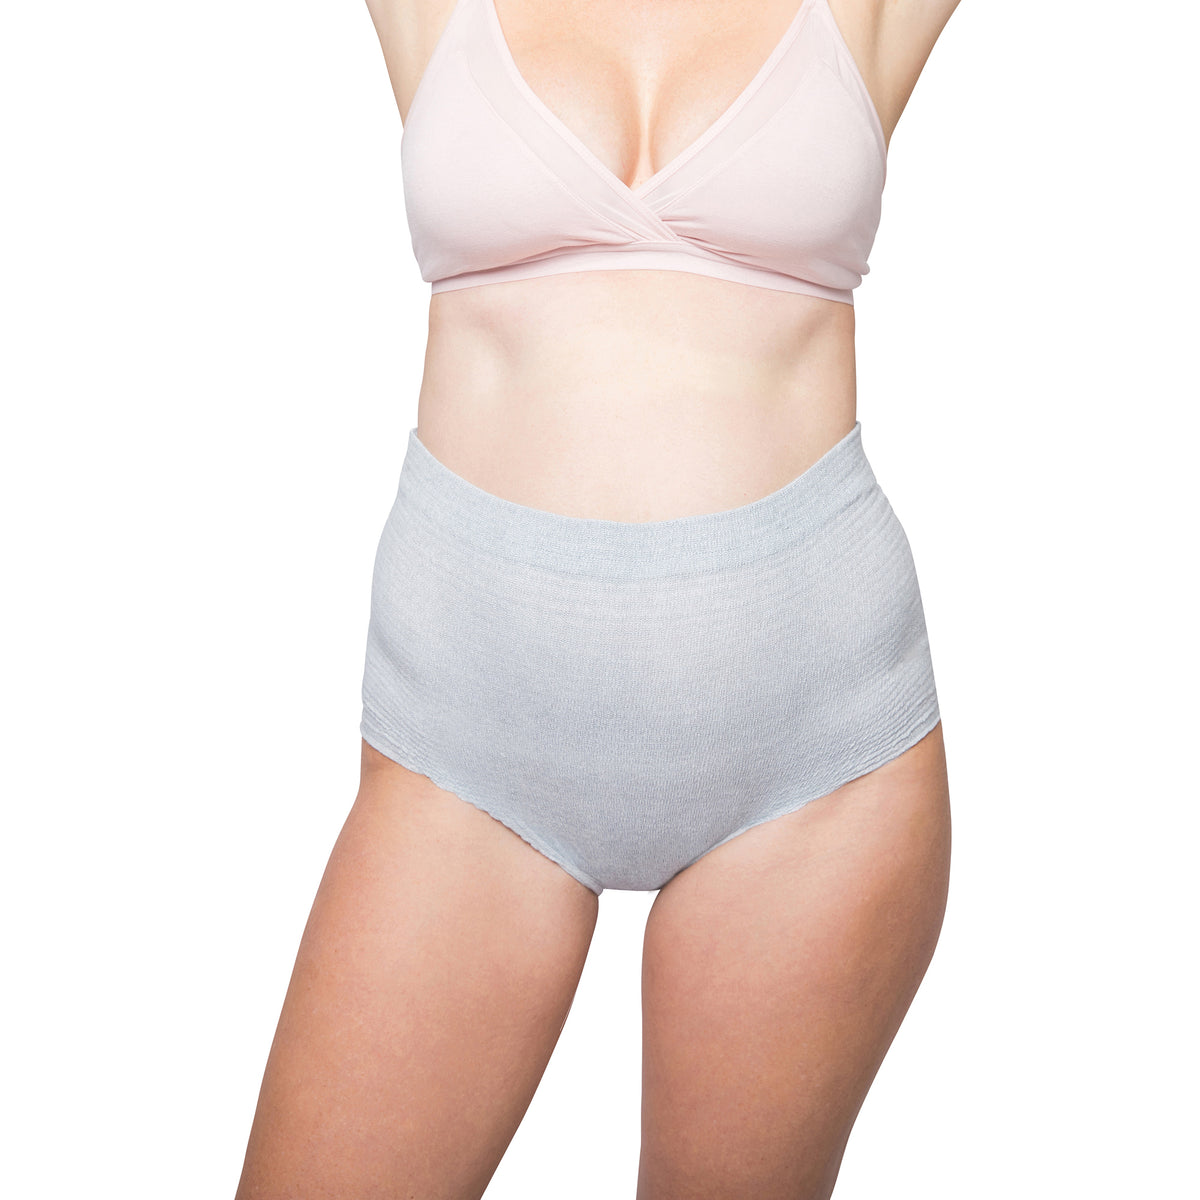 Disposable Hospital Postpartum Underwear Kit for Women Girdles